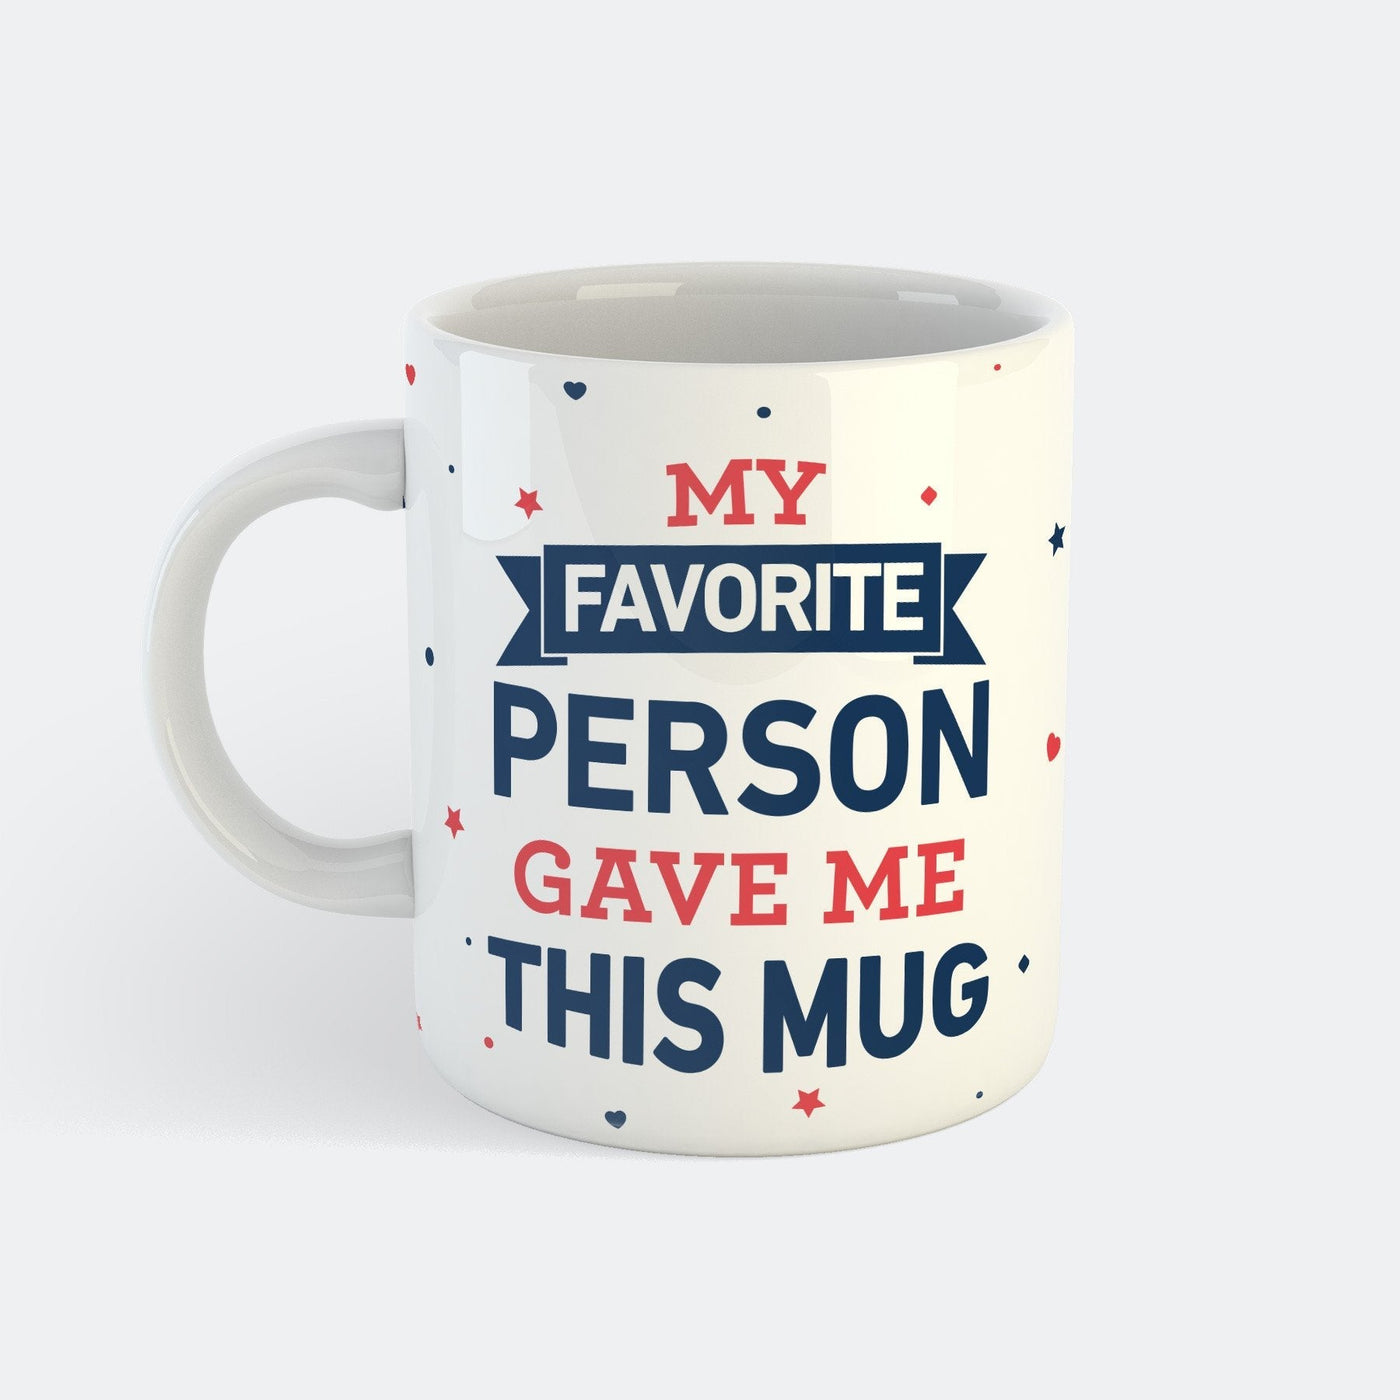 My Favorite Person Gave Me This Mug Krus